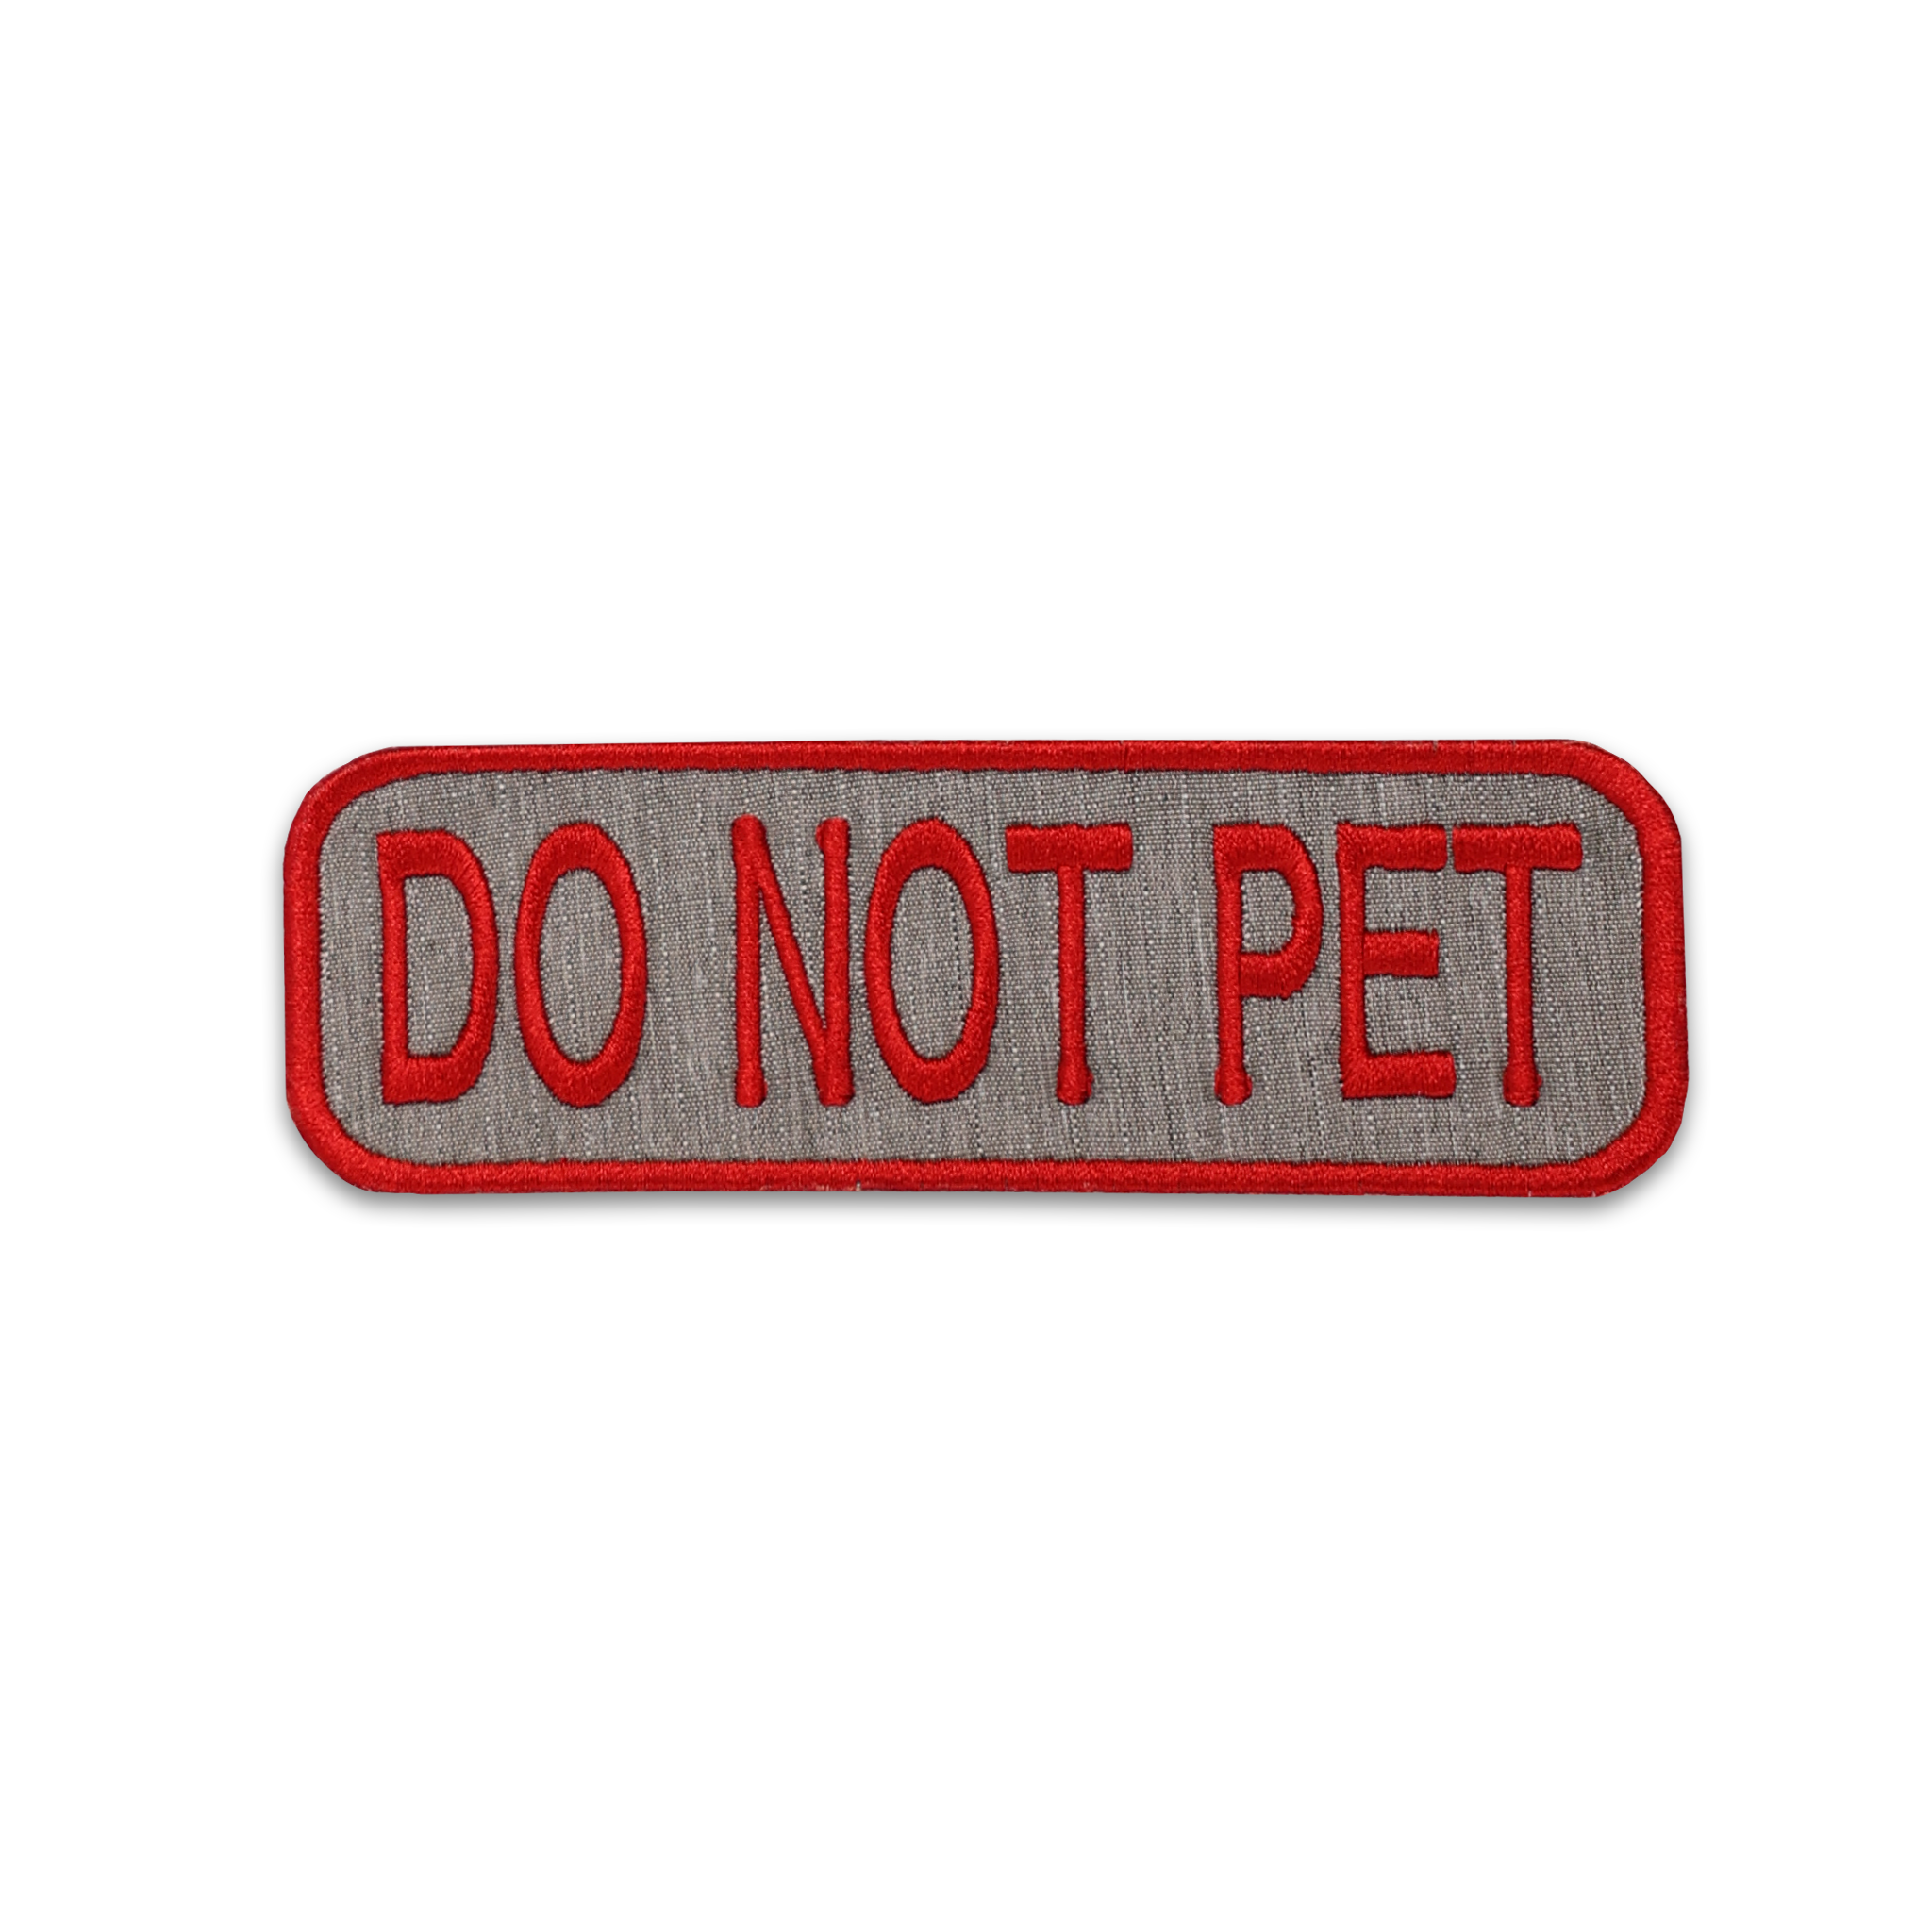 Do Not Pet 2x6 Patch